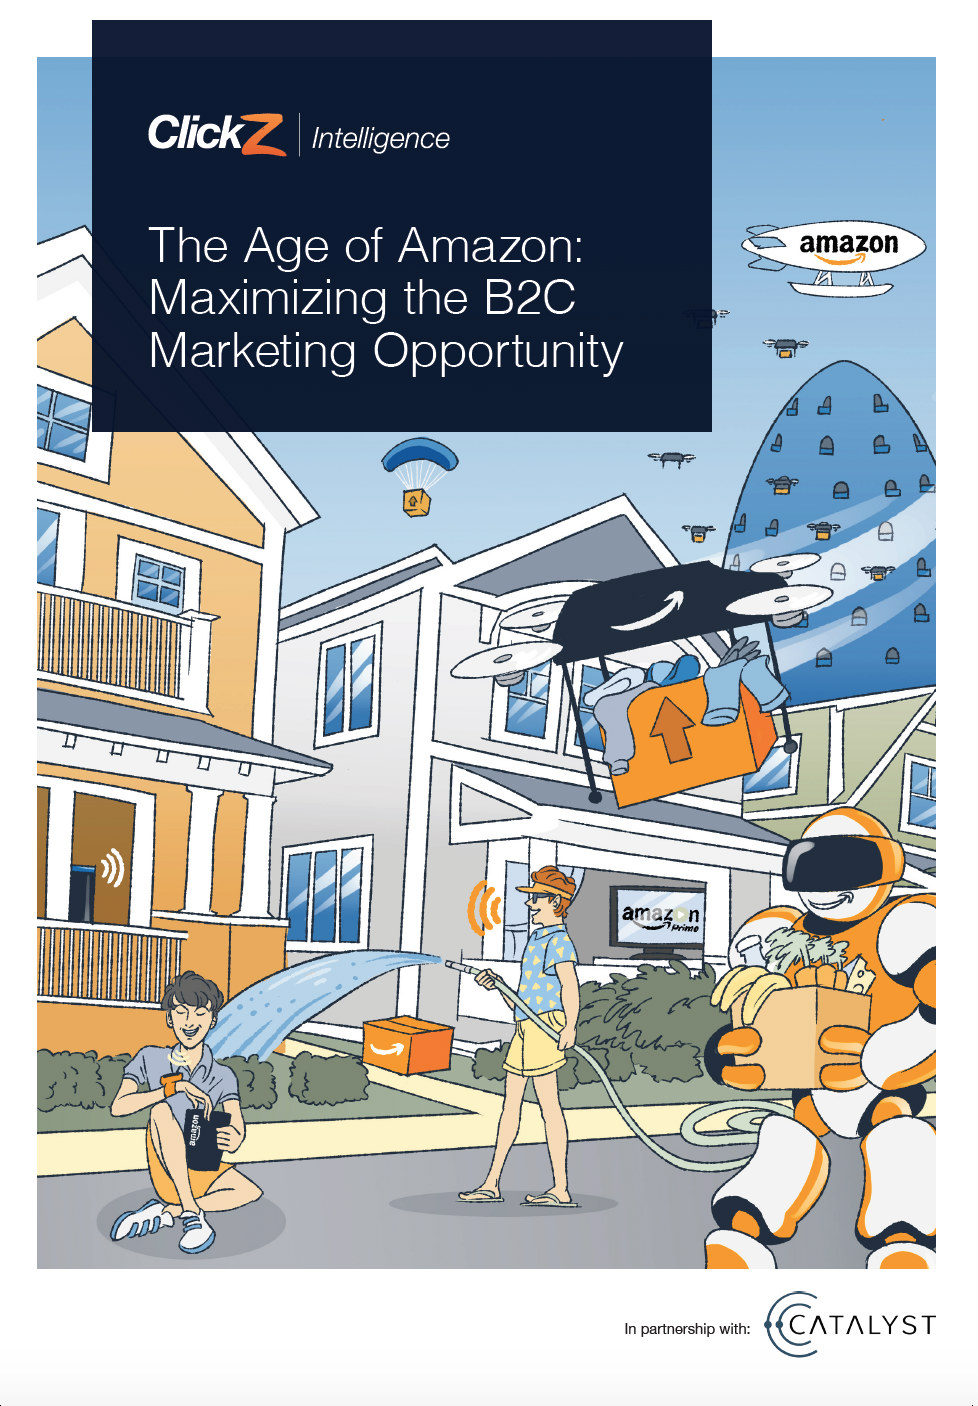 The Age of Amazon Whitepaper (Amazon Marketing Strategies)